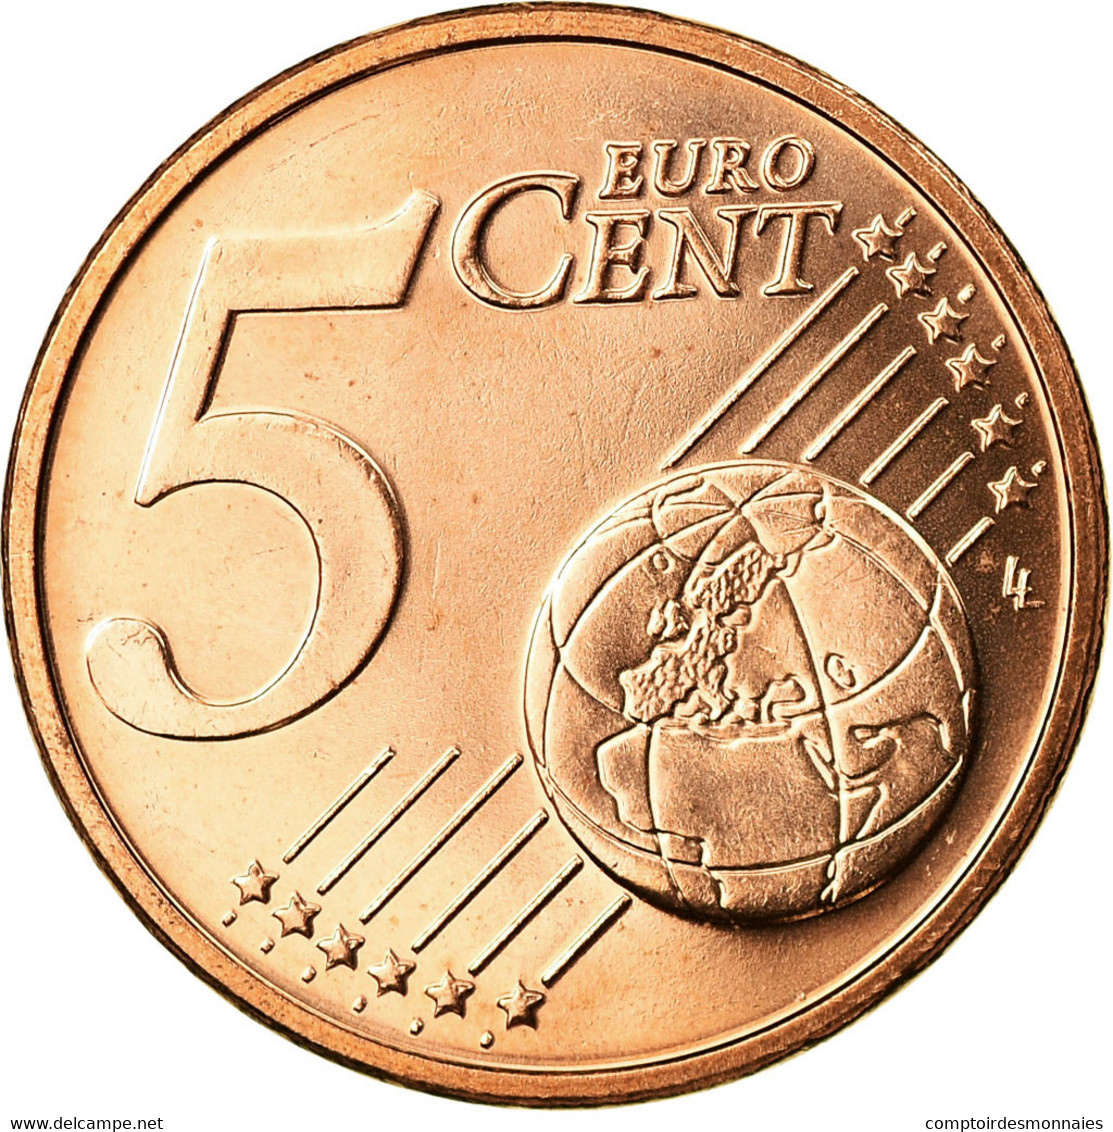 Slovaquie, 5 Euro Cent, 2010, SPL, Copper Plated Steel, KM:97 - Slowakei